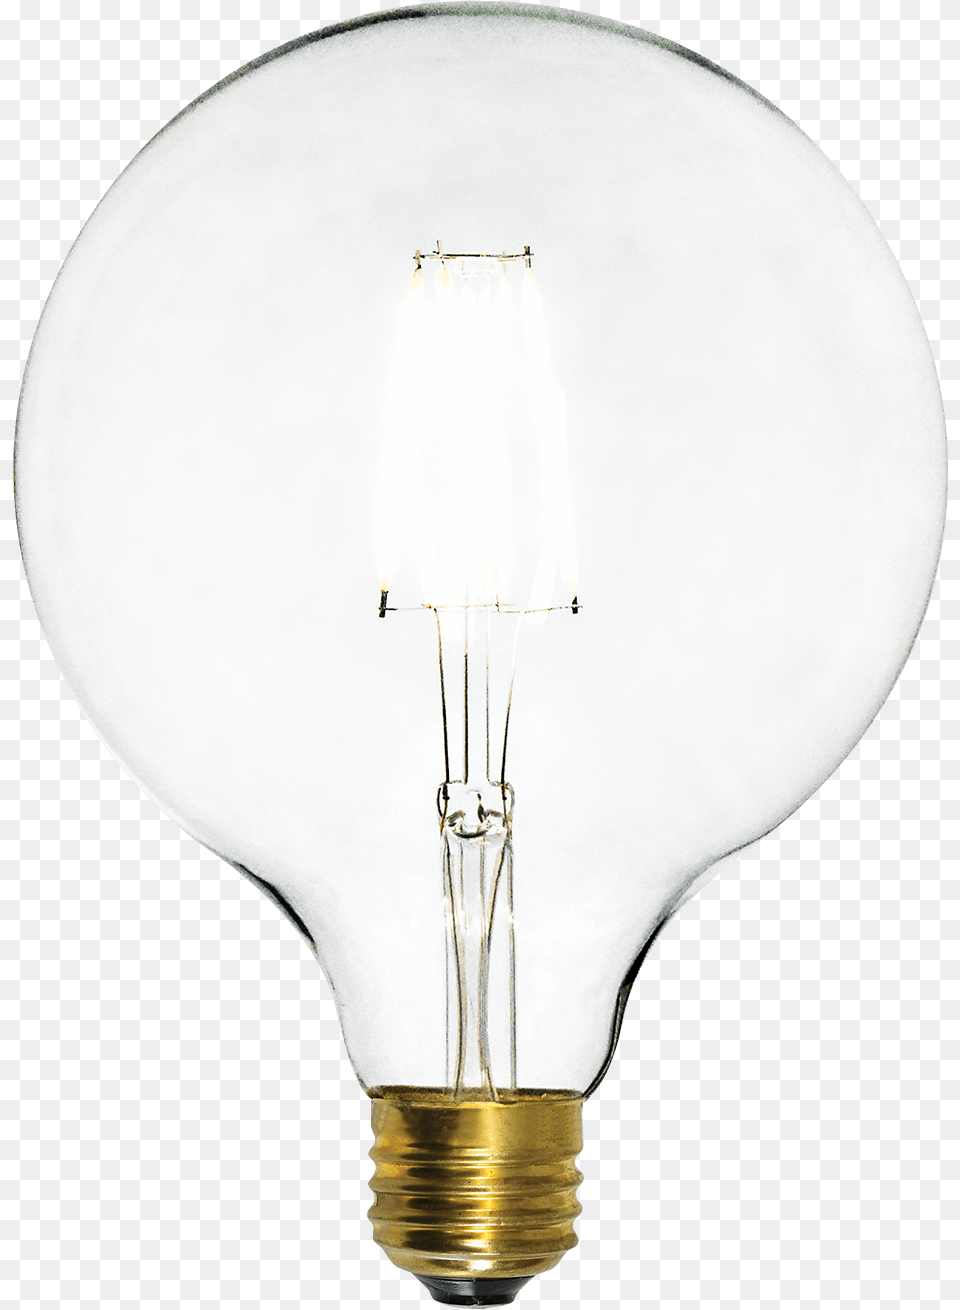 Inch Led Light Bulb Antique Style Incandescent Light Bulb, Lightbulb, Aircraft, Airplane, Transportation Free Transparent Png